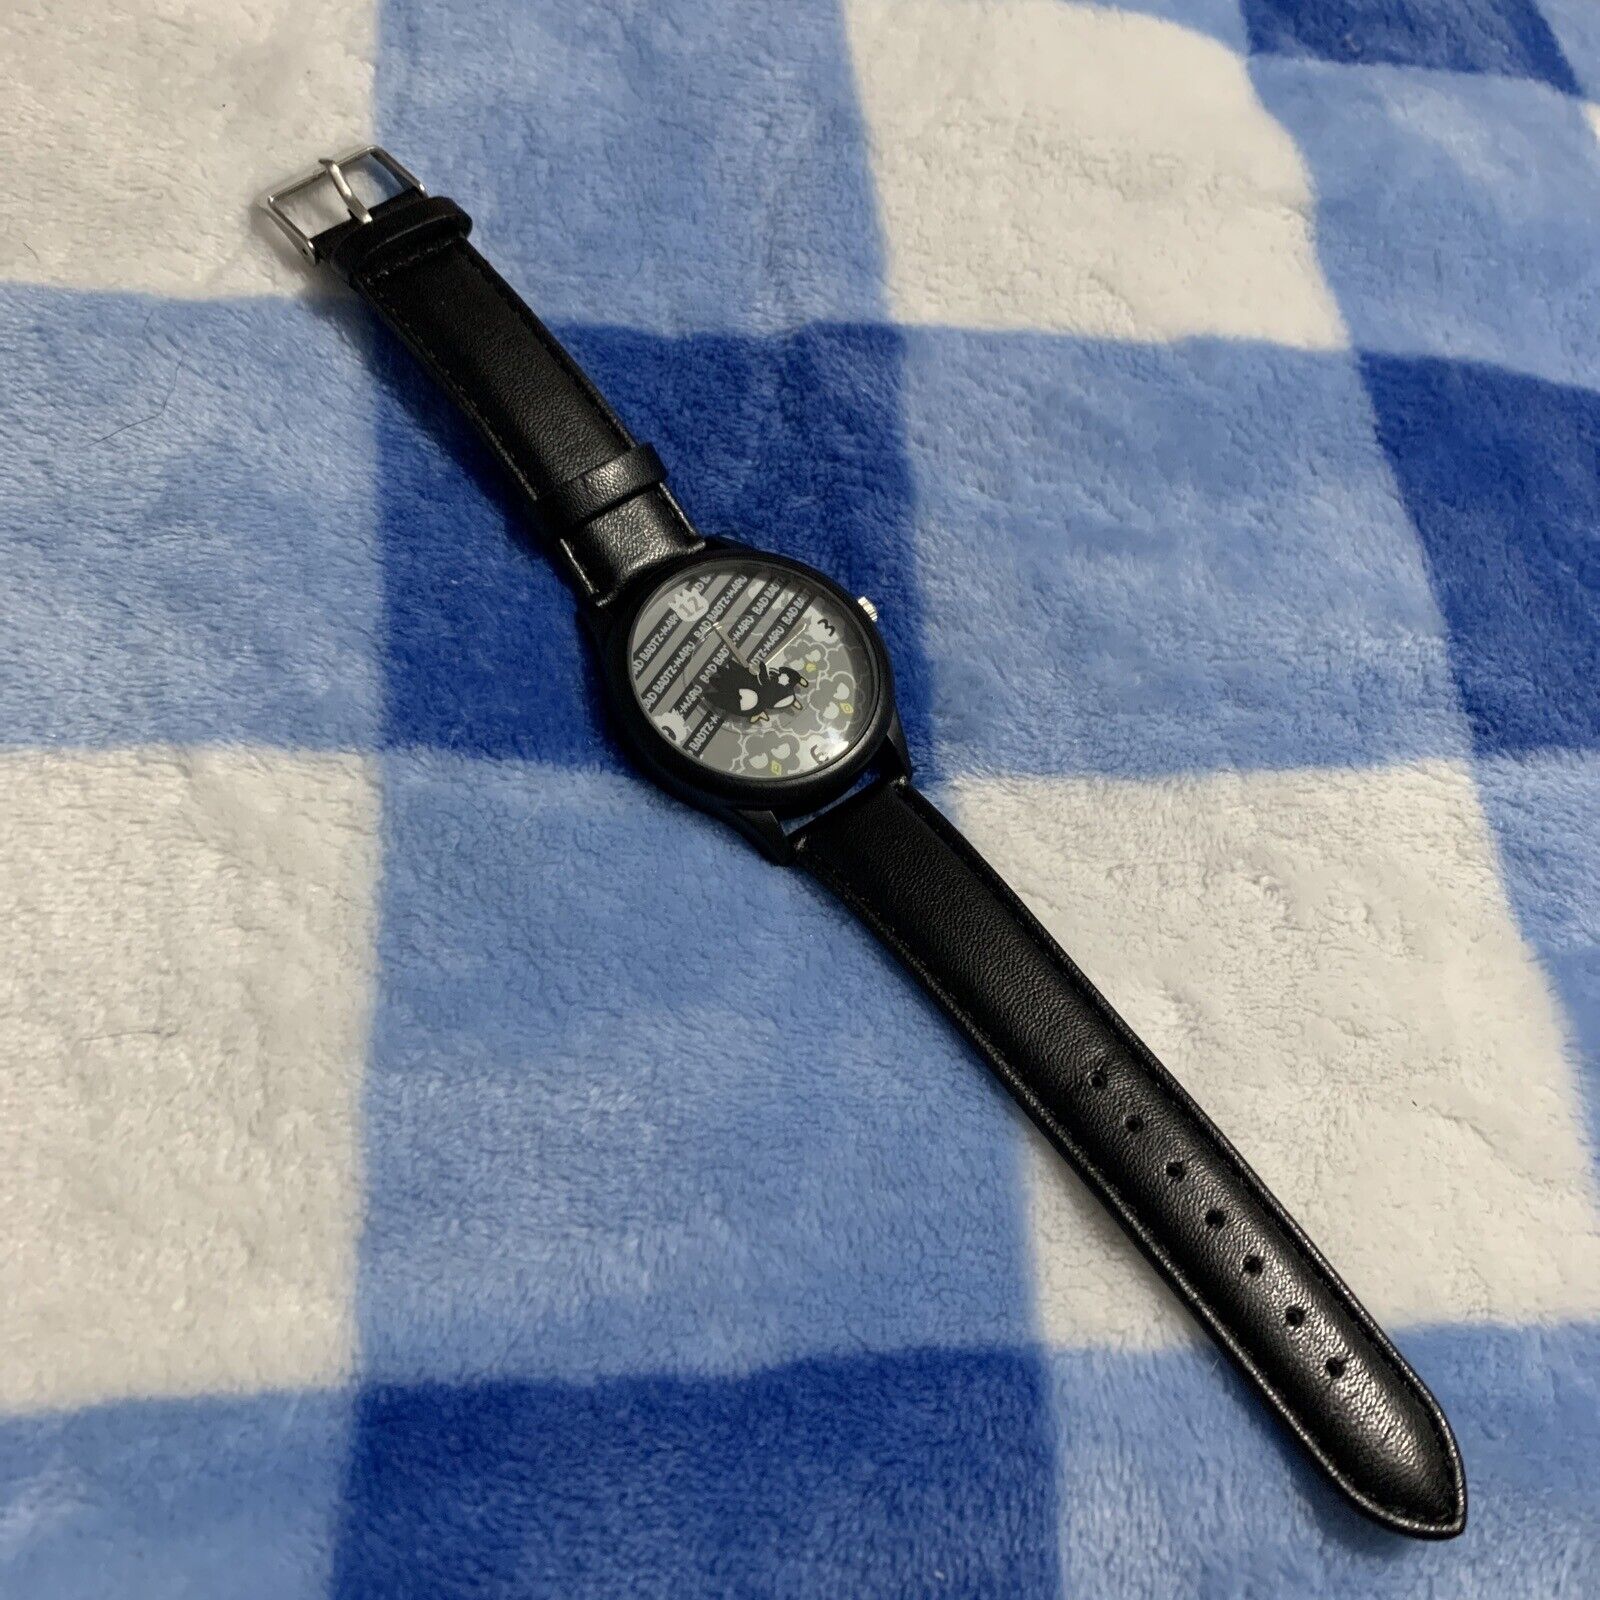 Tested Sanrio Original Japan Unique Bad Badtz Maru Black Leather Band Watch